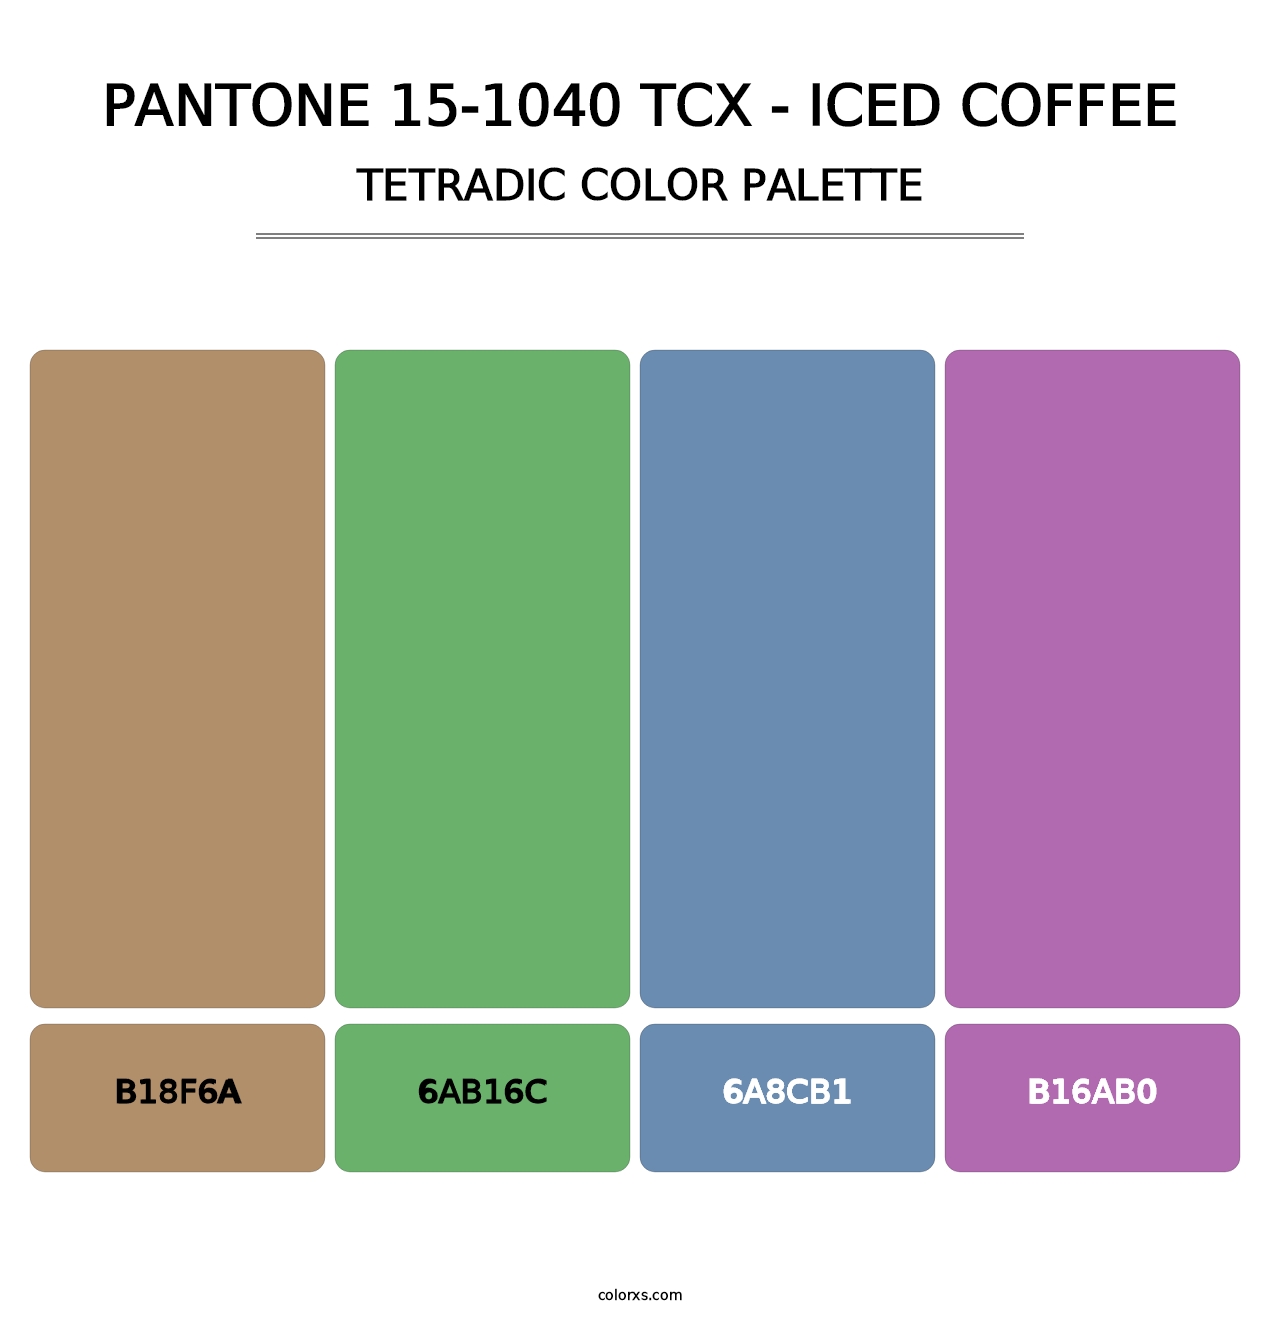 PANTONE 15-1040 TCX - Iced Coffee - Tetradic Color Palette